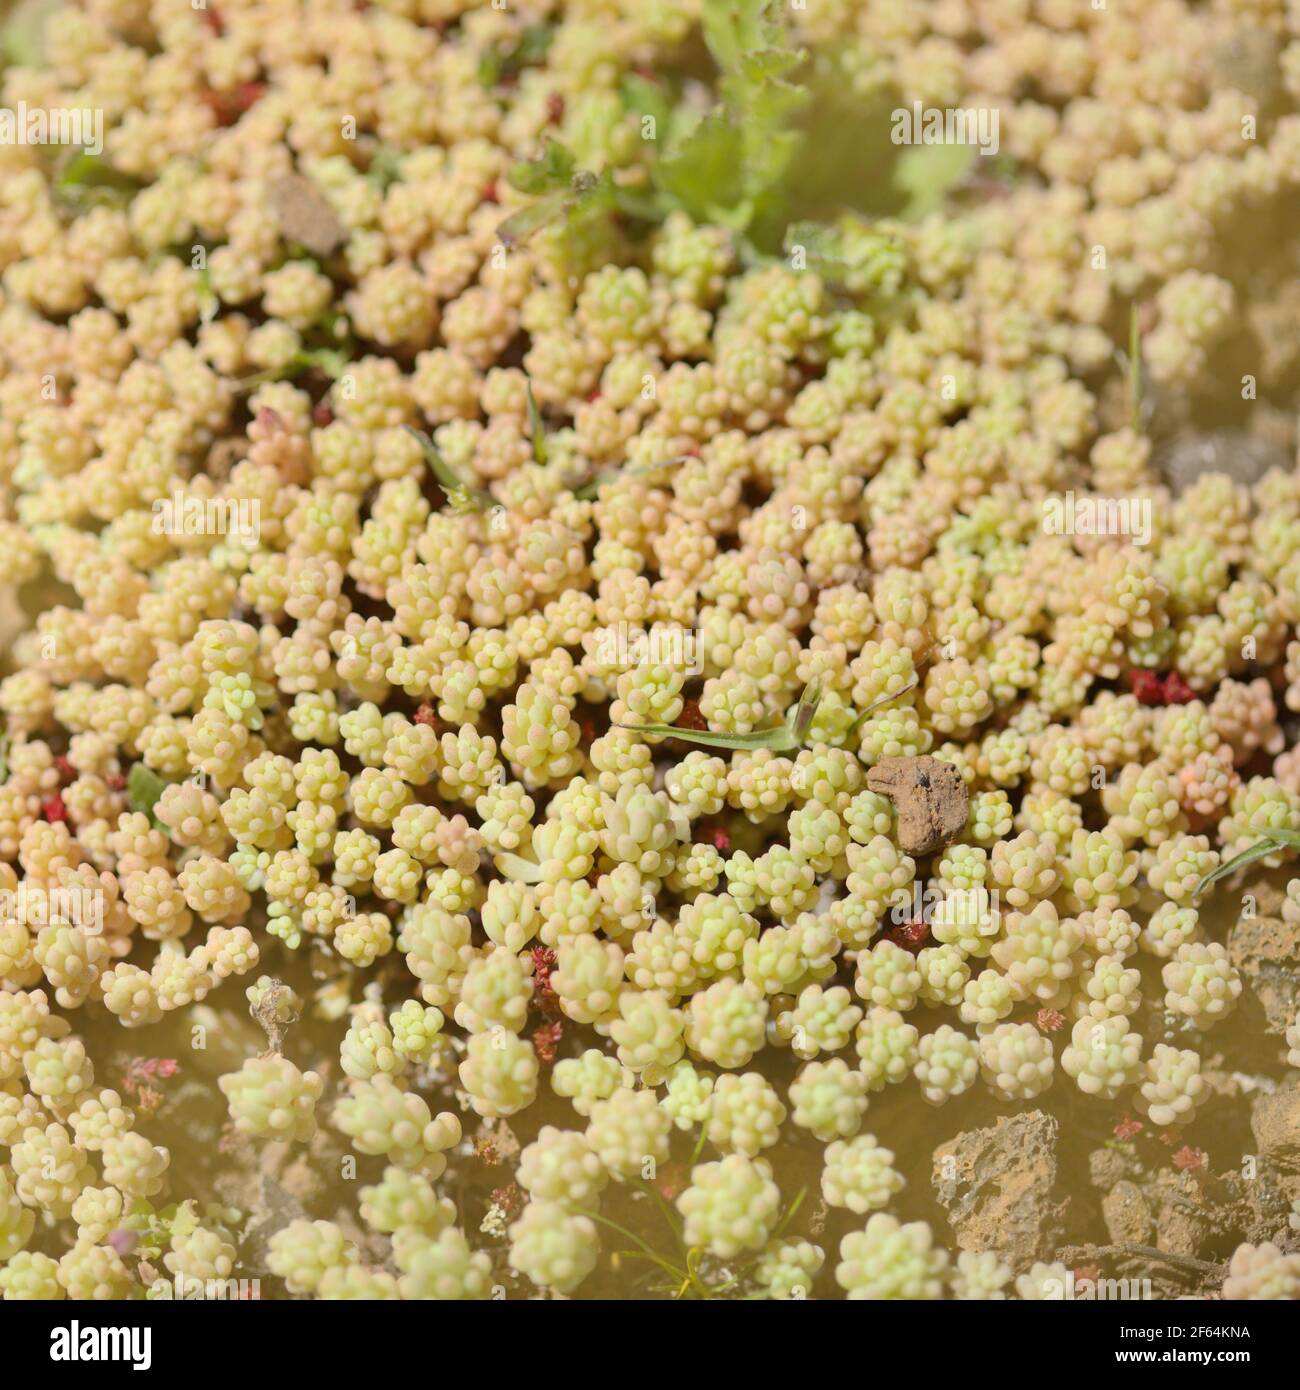 Flora of Gran Canaria -  Sedum rubens, red stonecrop, natural macro floral background Stock Photo